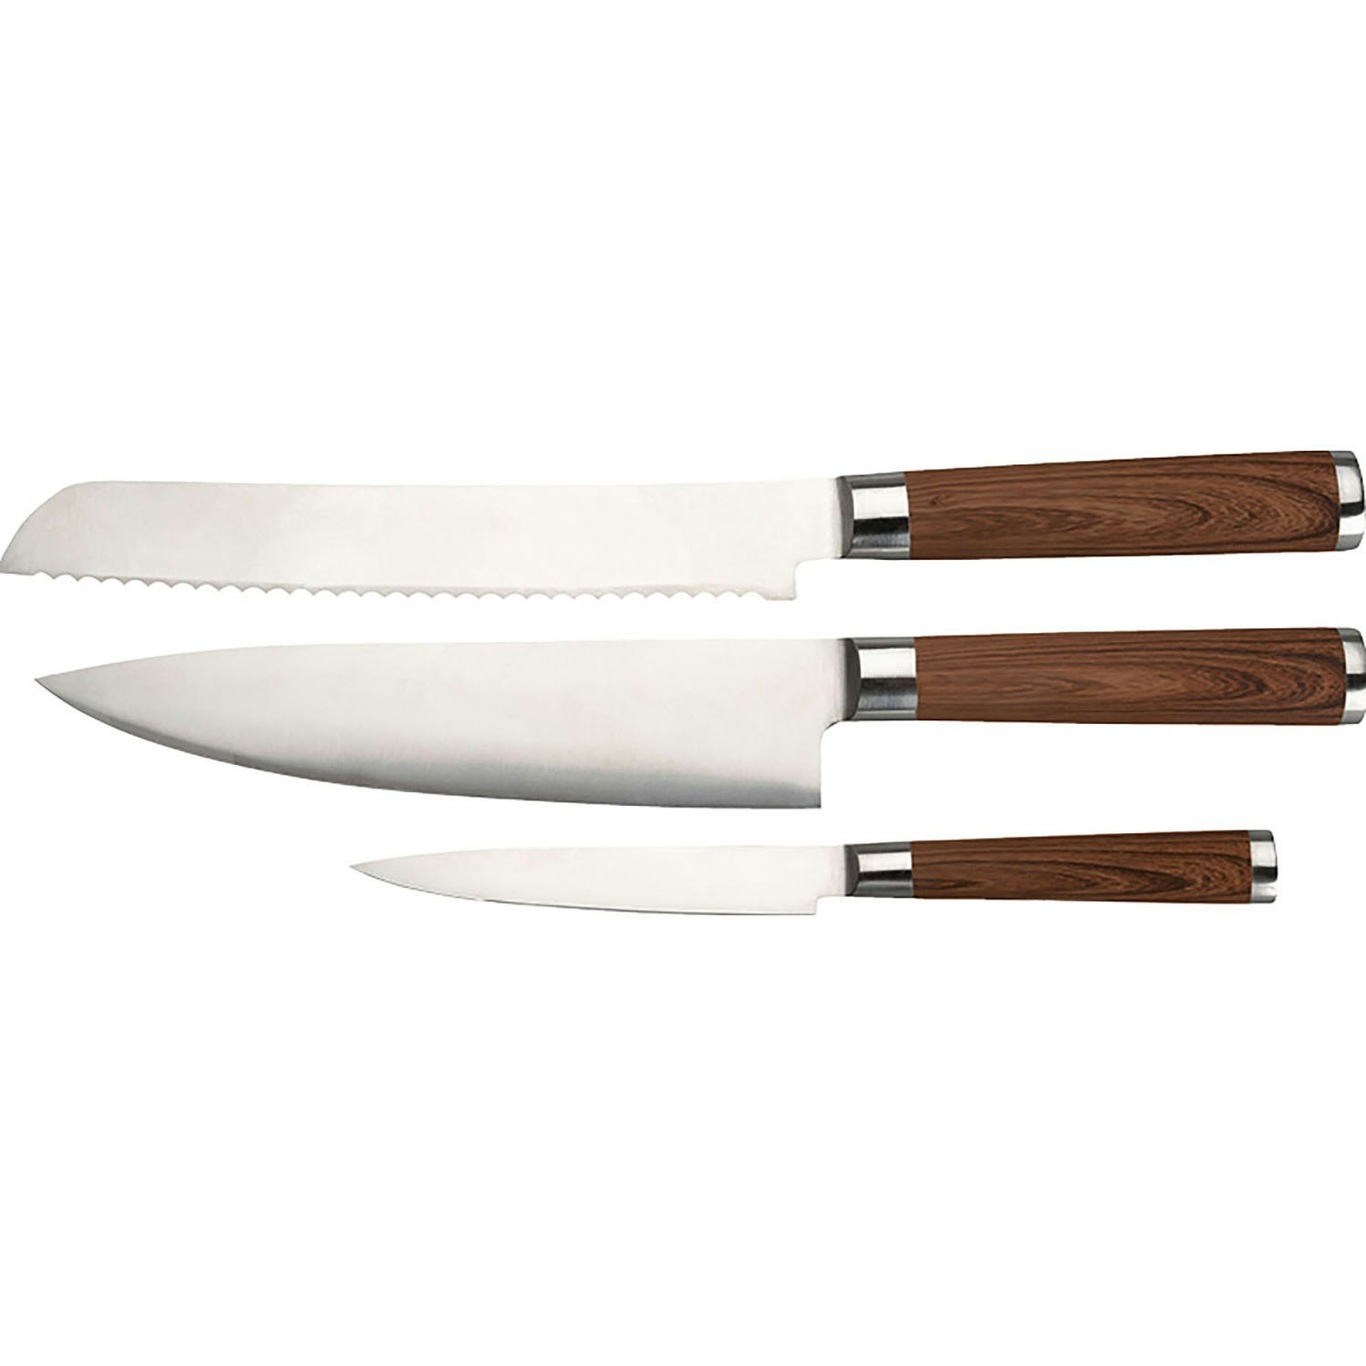 https://royaldesign.com/image/2/dorre-kasima-knife-set-3-pcs-0?w=800&quality=80